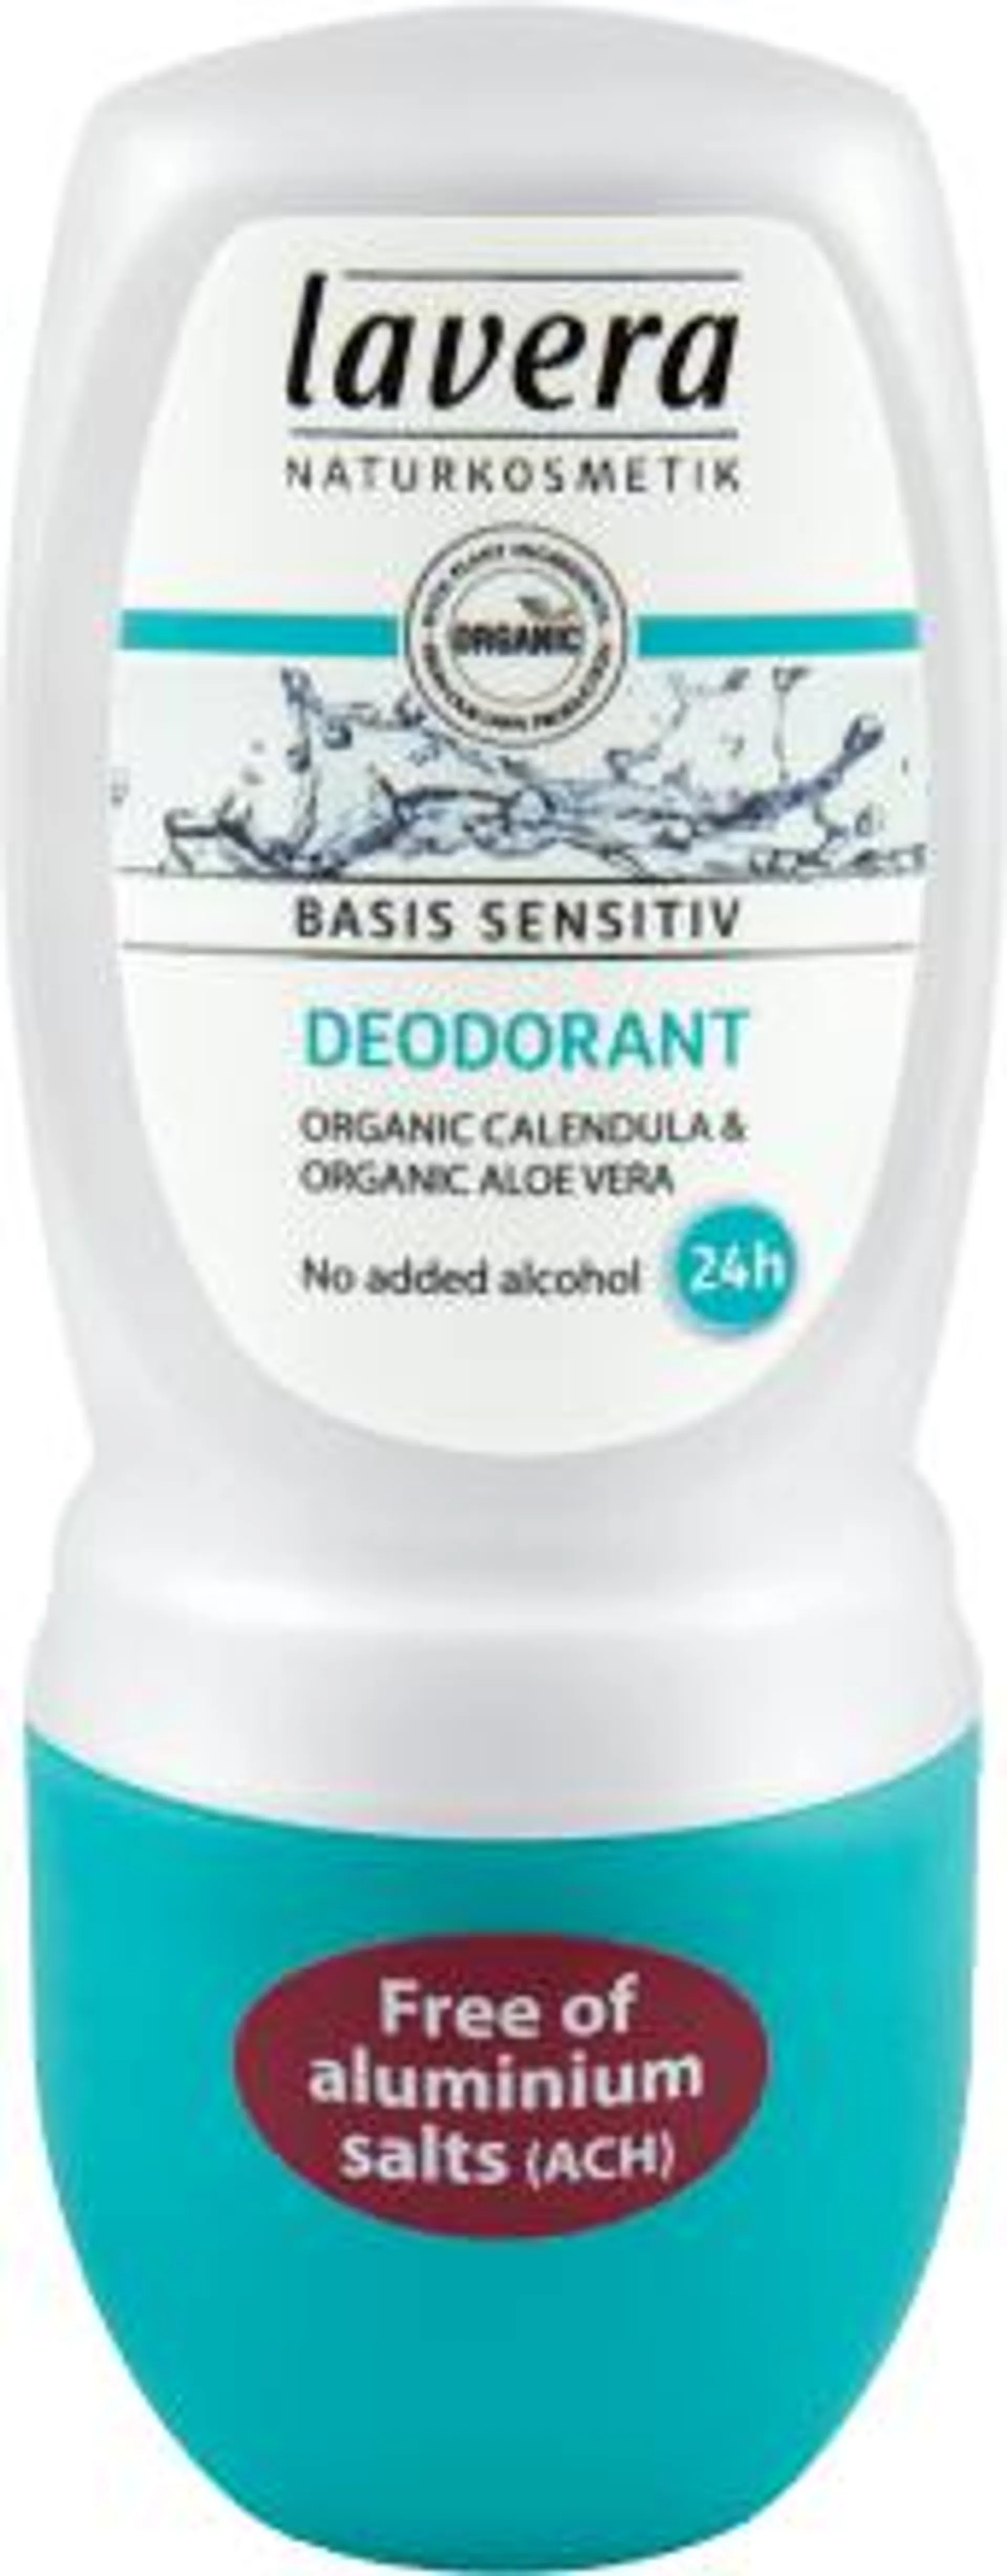 Deodorante roll-on Natural and Sensitive Basis Sensitiv, 50 ml